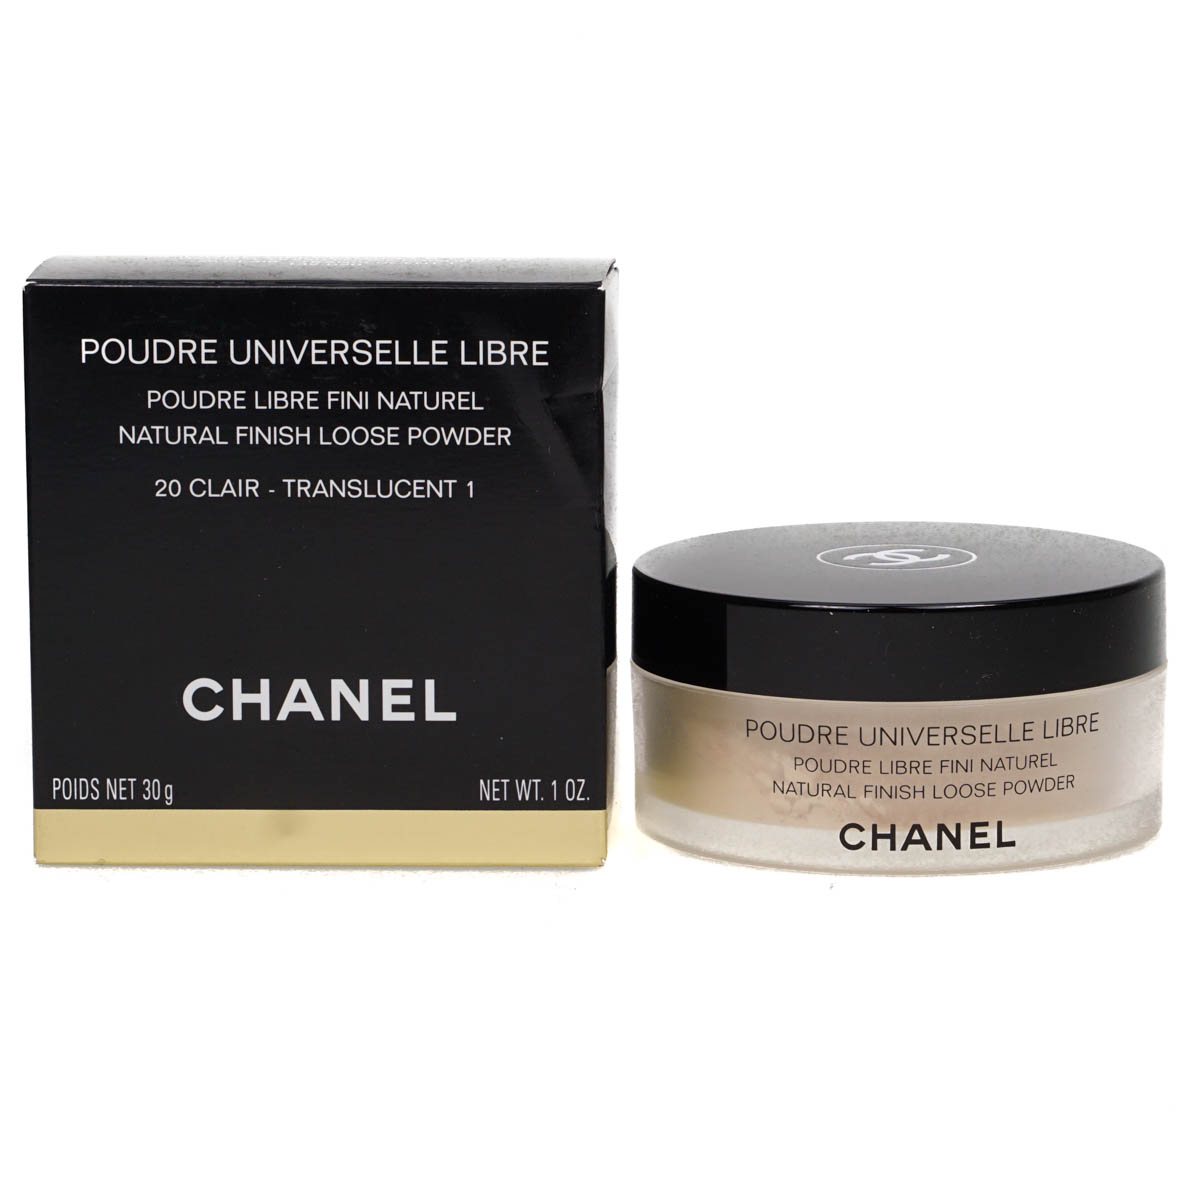 Chanel Poudre Universelle Libre Loose Powder 20 Clair Translucent 1 ...